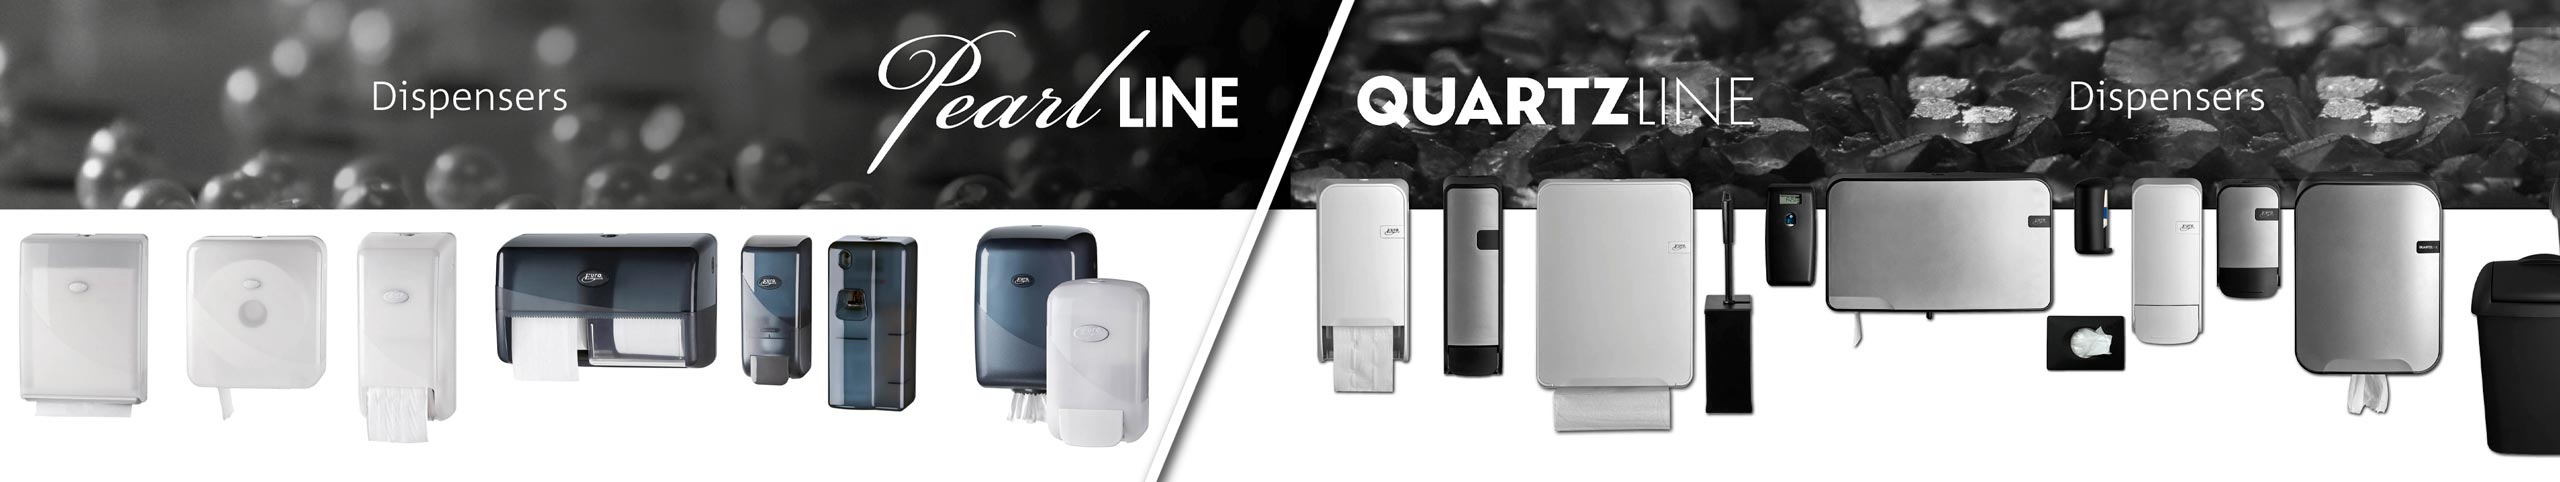 Dispensers Quartz line Pearl line